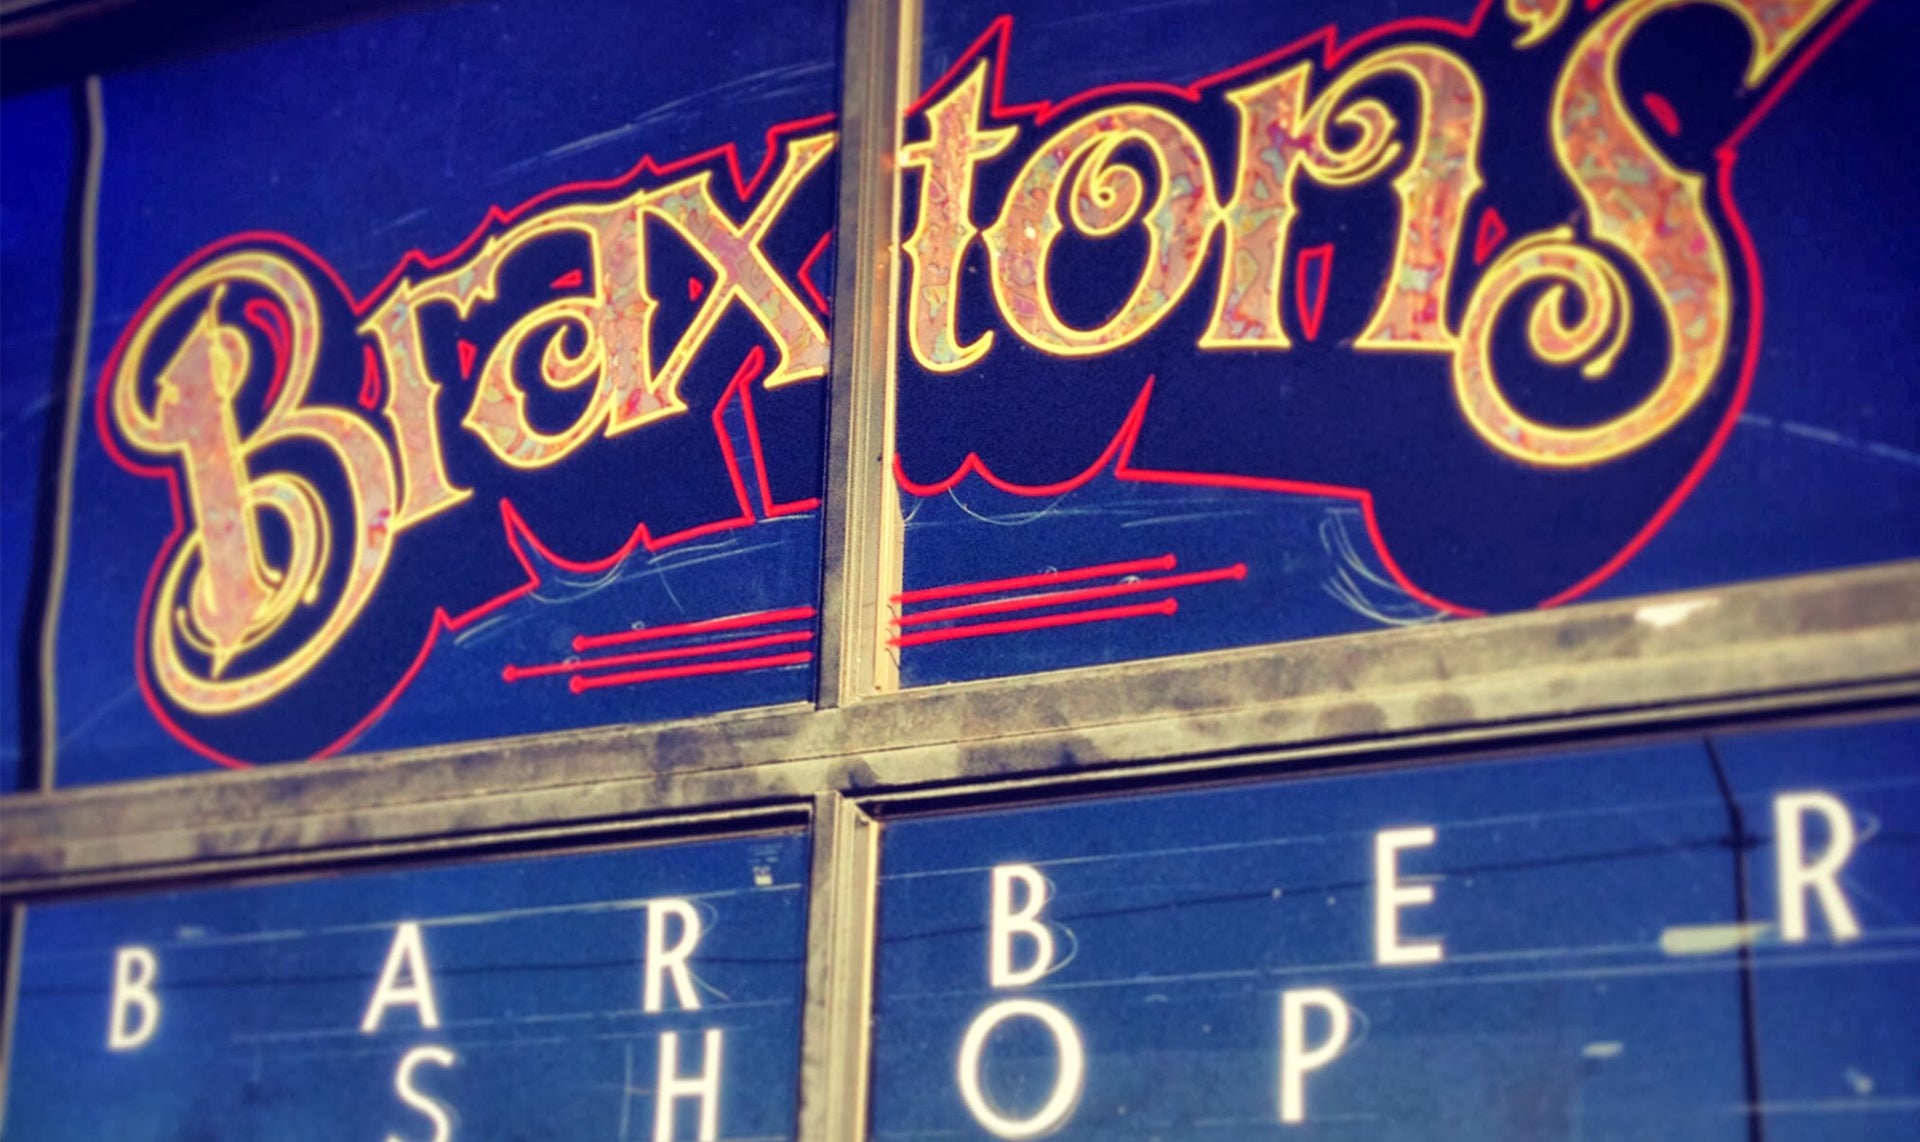 Braxton's Barber Shop window sign